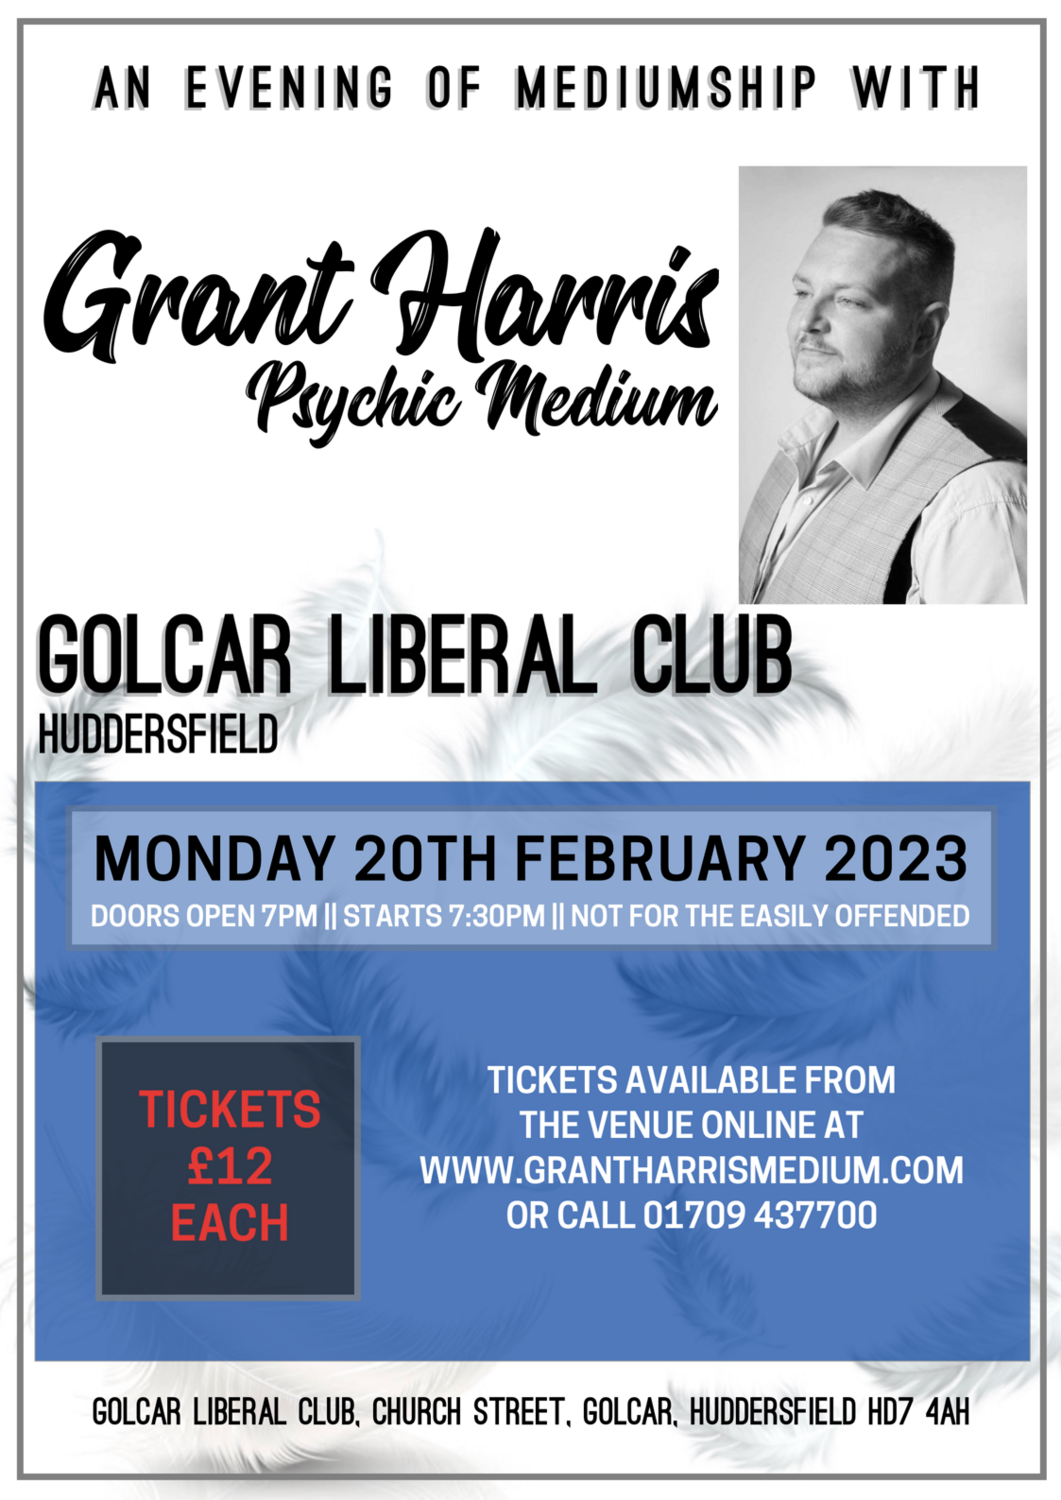 Golcar Liberal Club, Huddersfield, Monday 20th February 2023